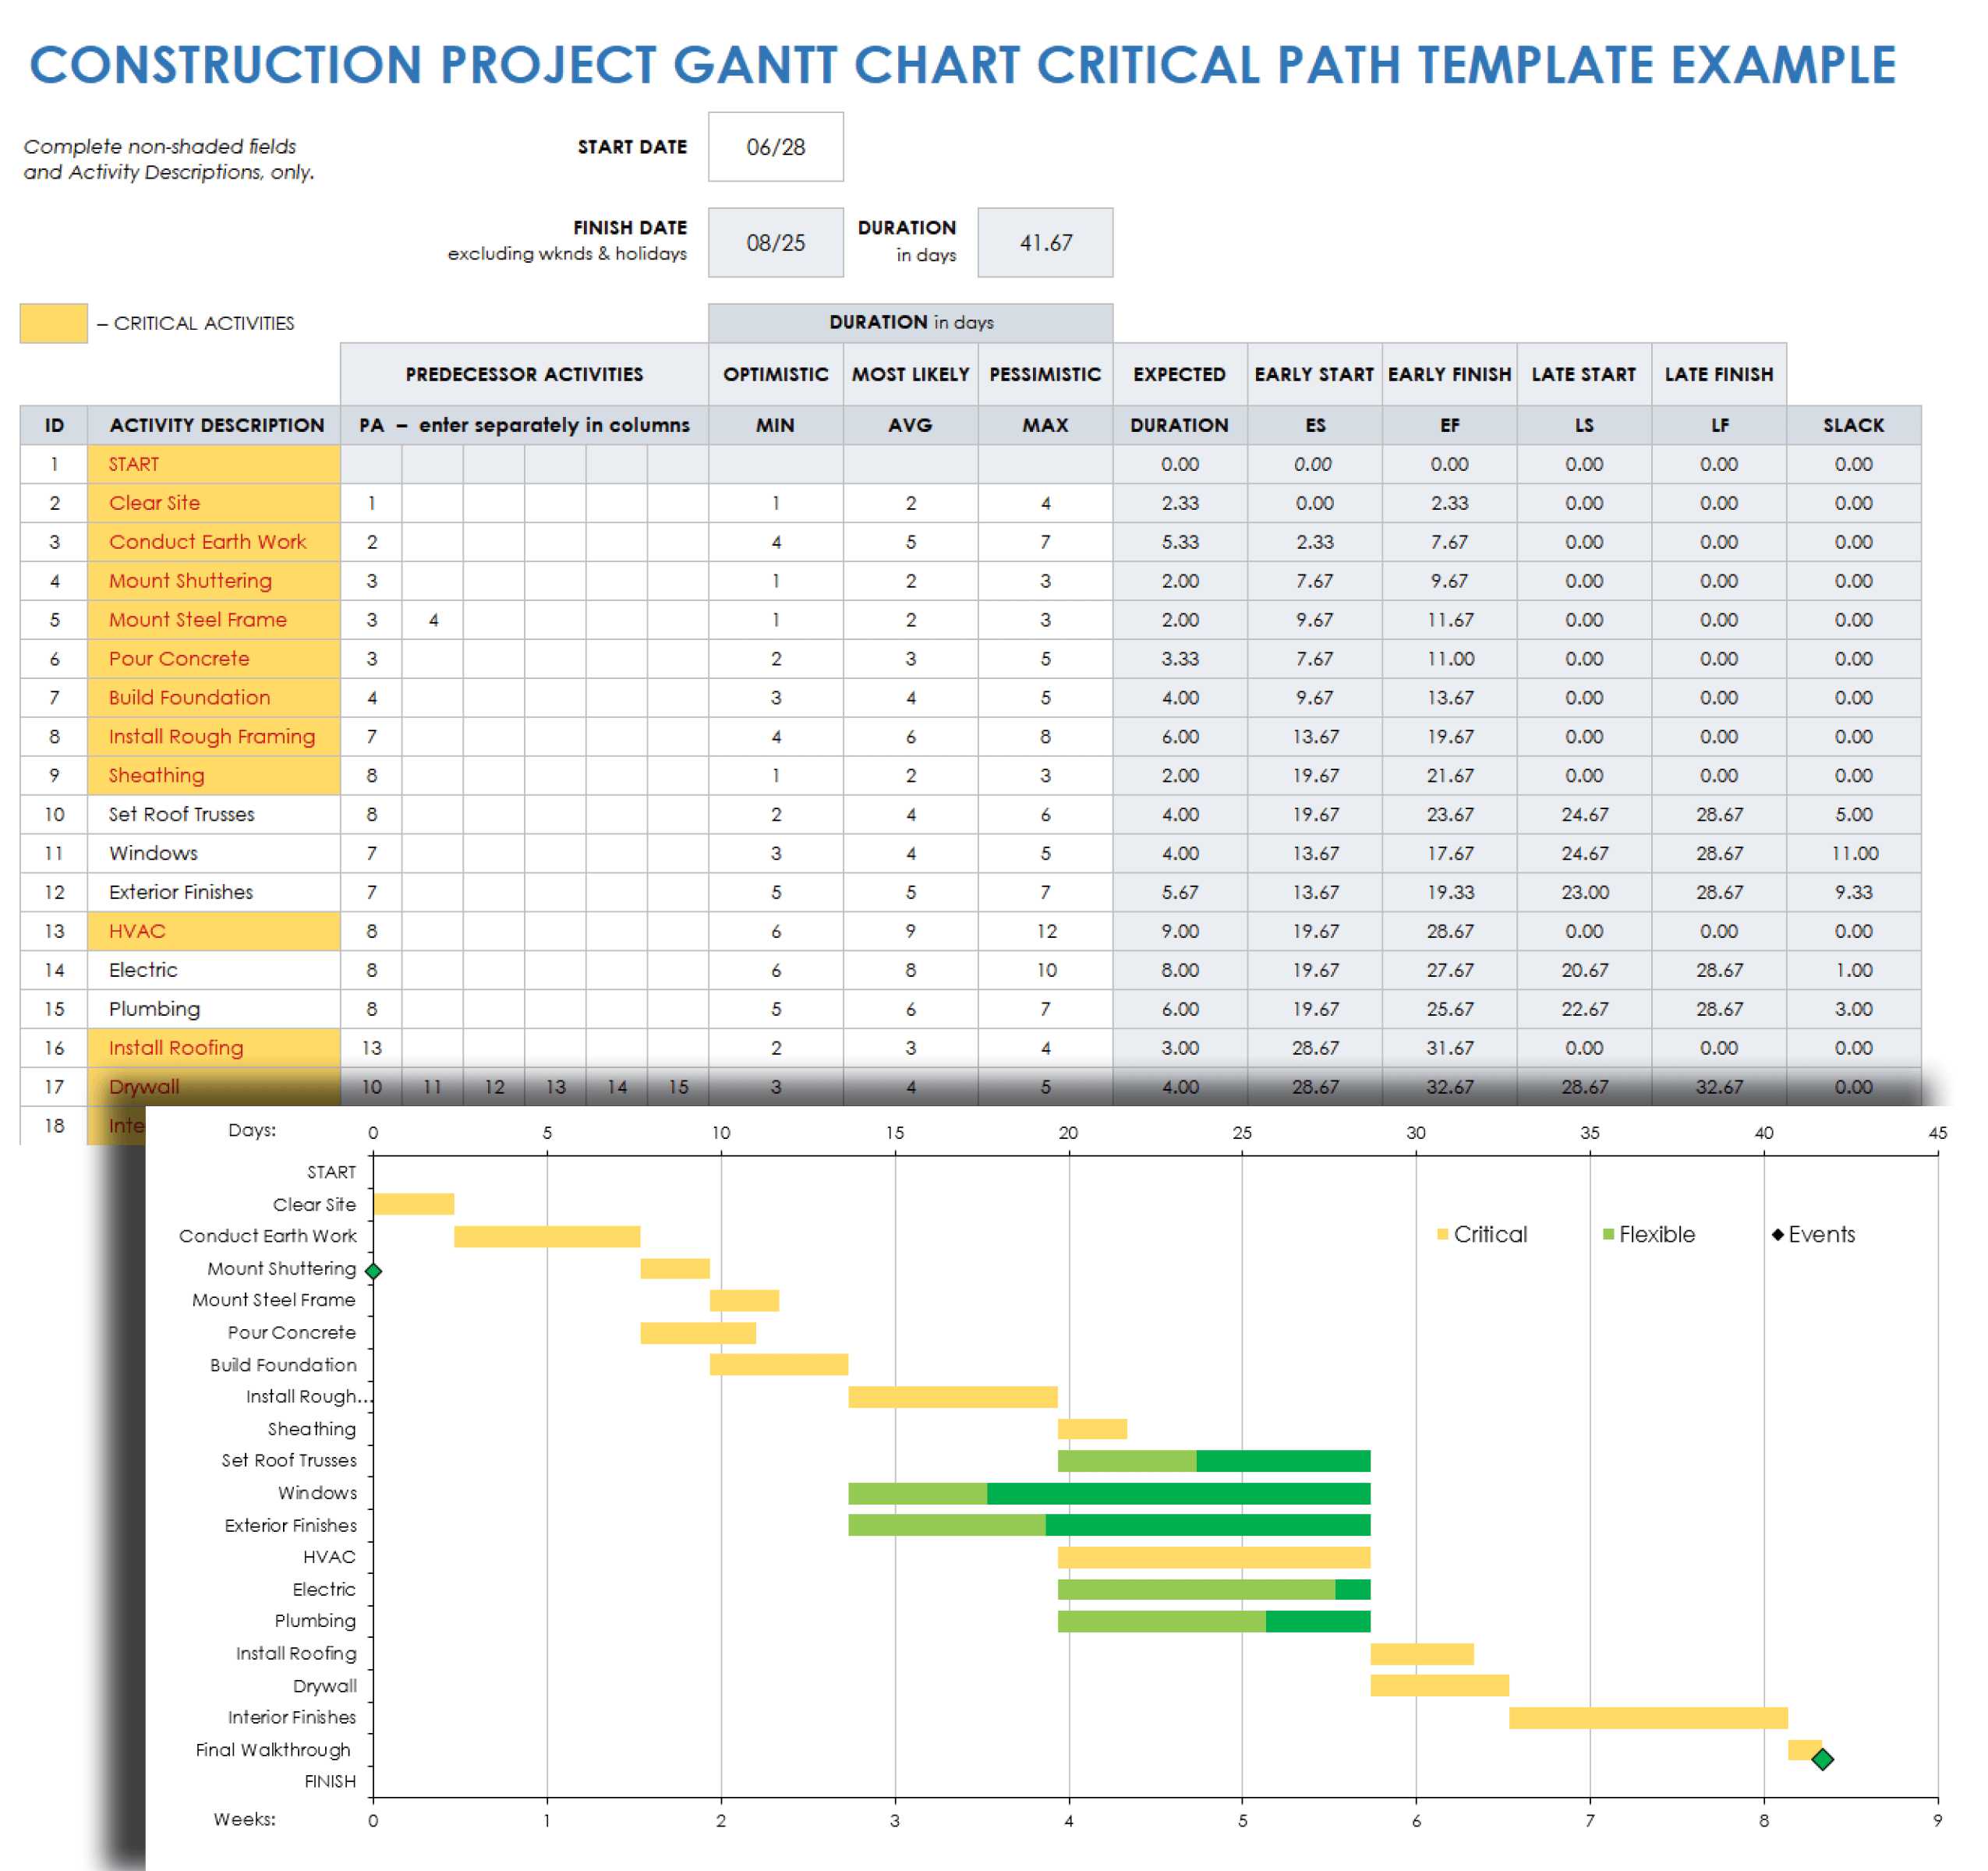 Construction Project Gantt Chart Critical Path Template Example